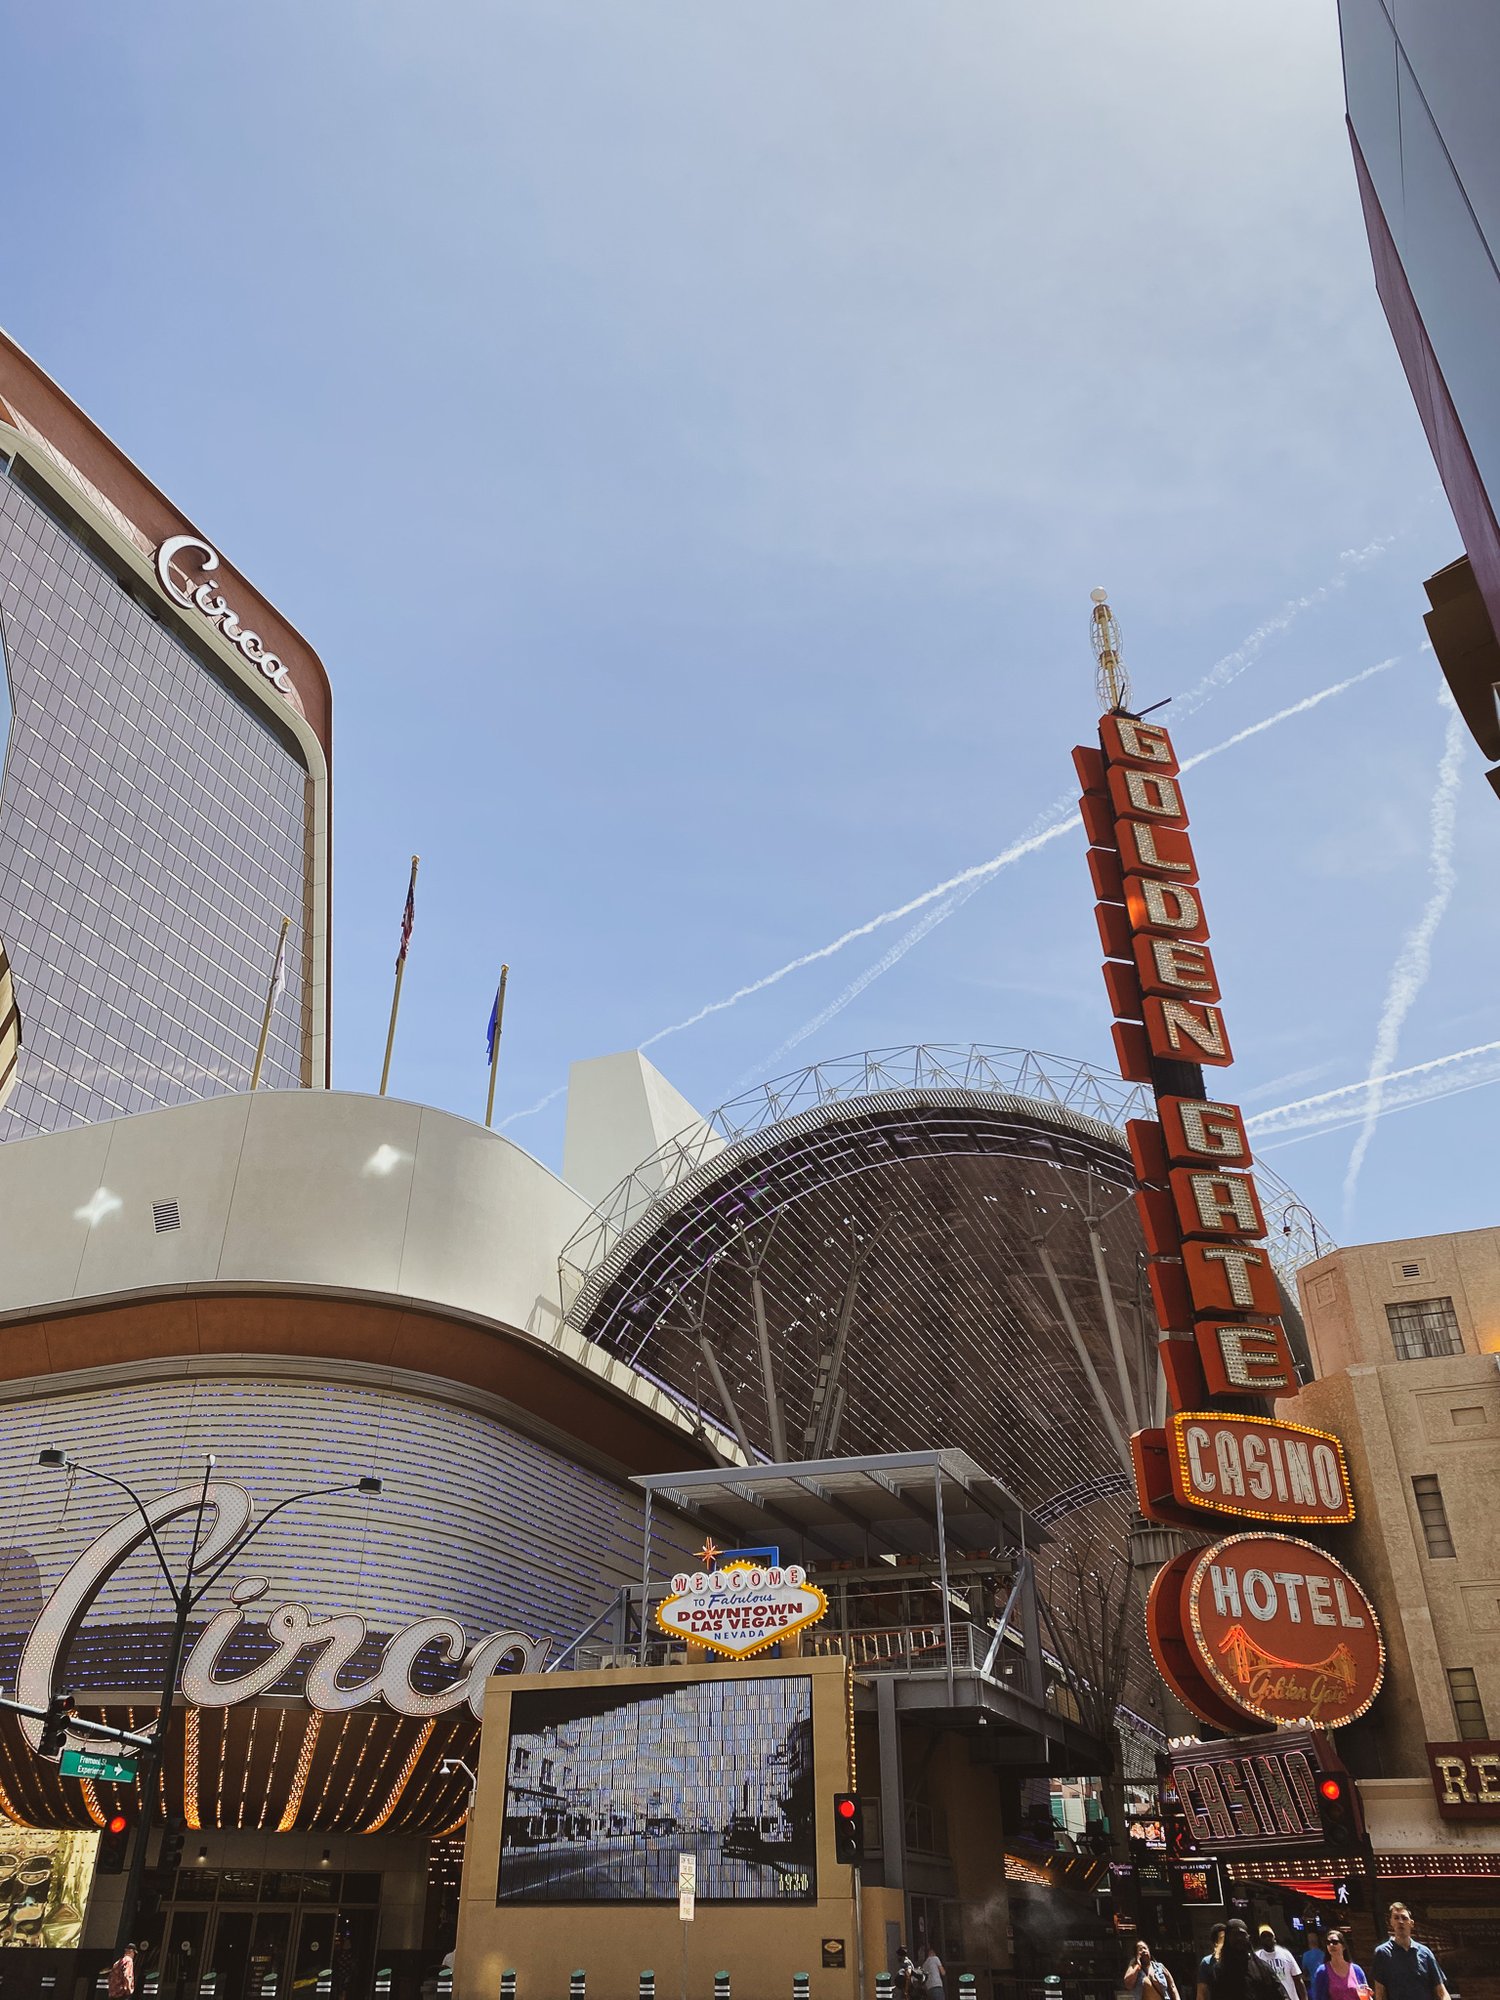 Retro Travel Guide to Las Vegas — mid-century millennial